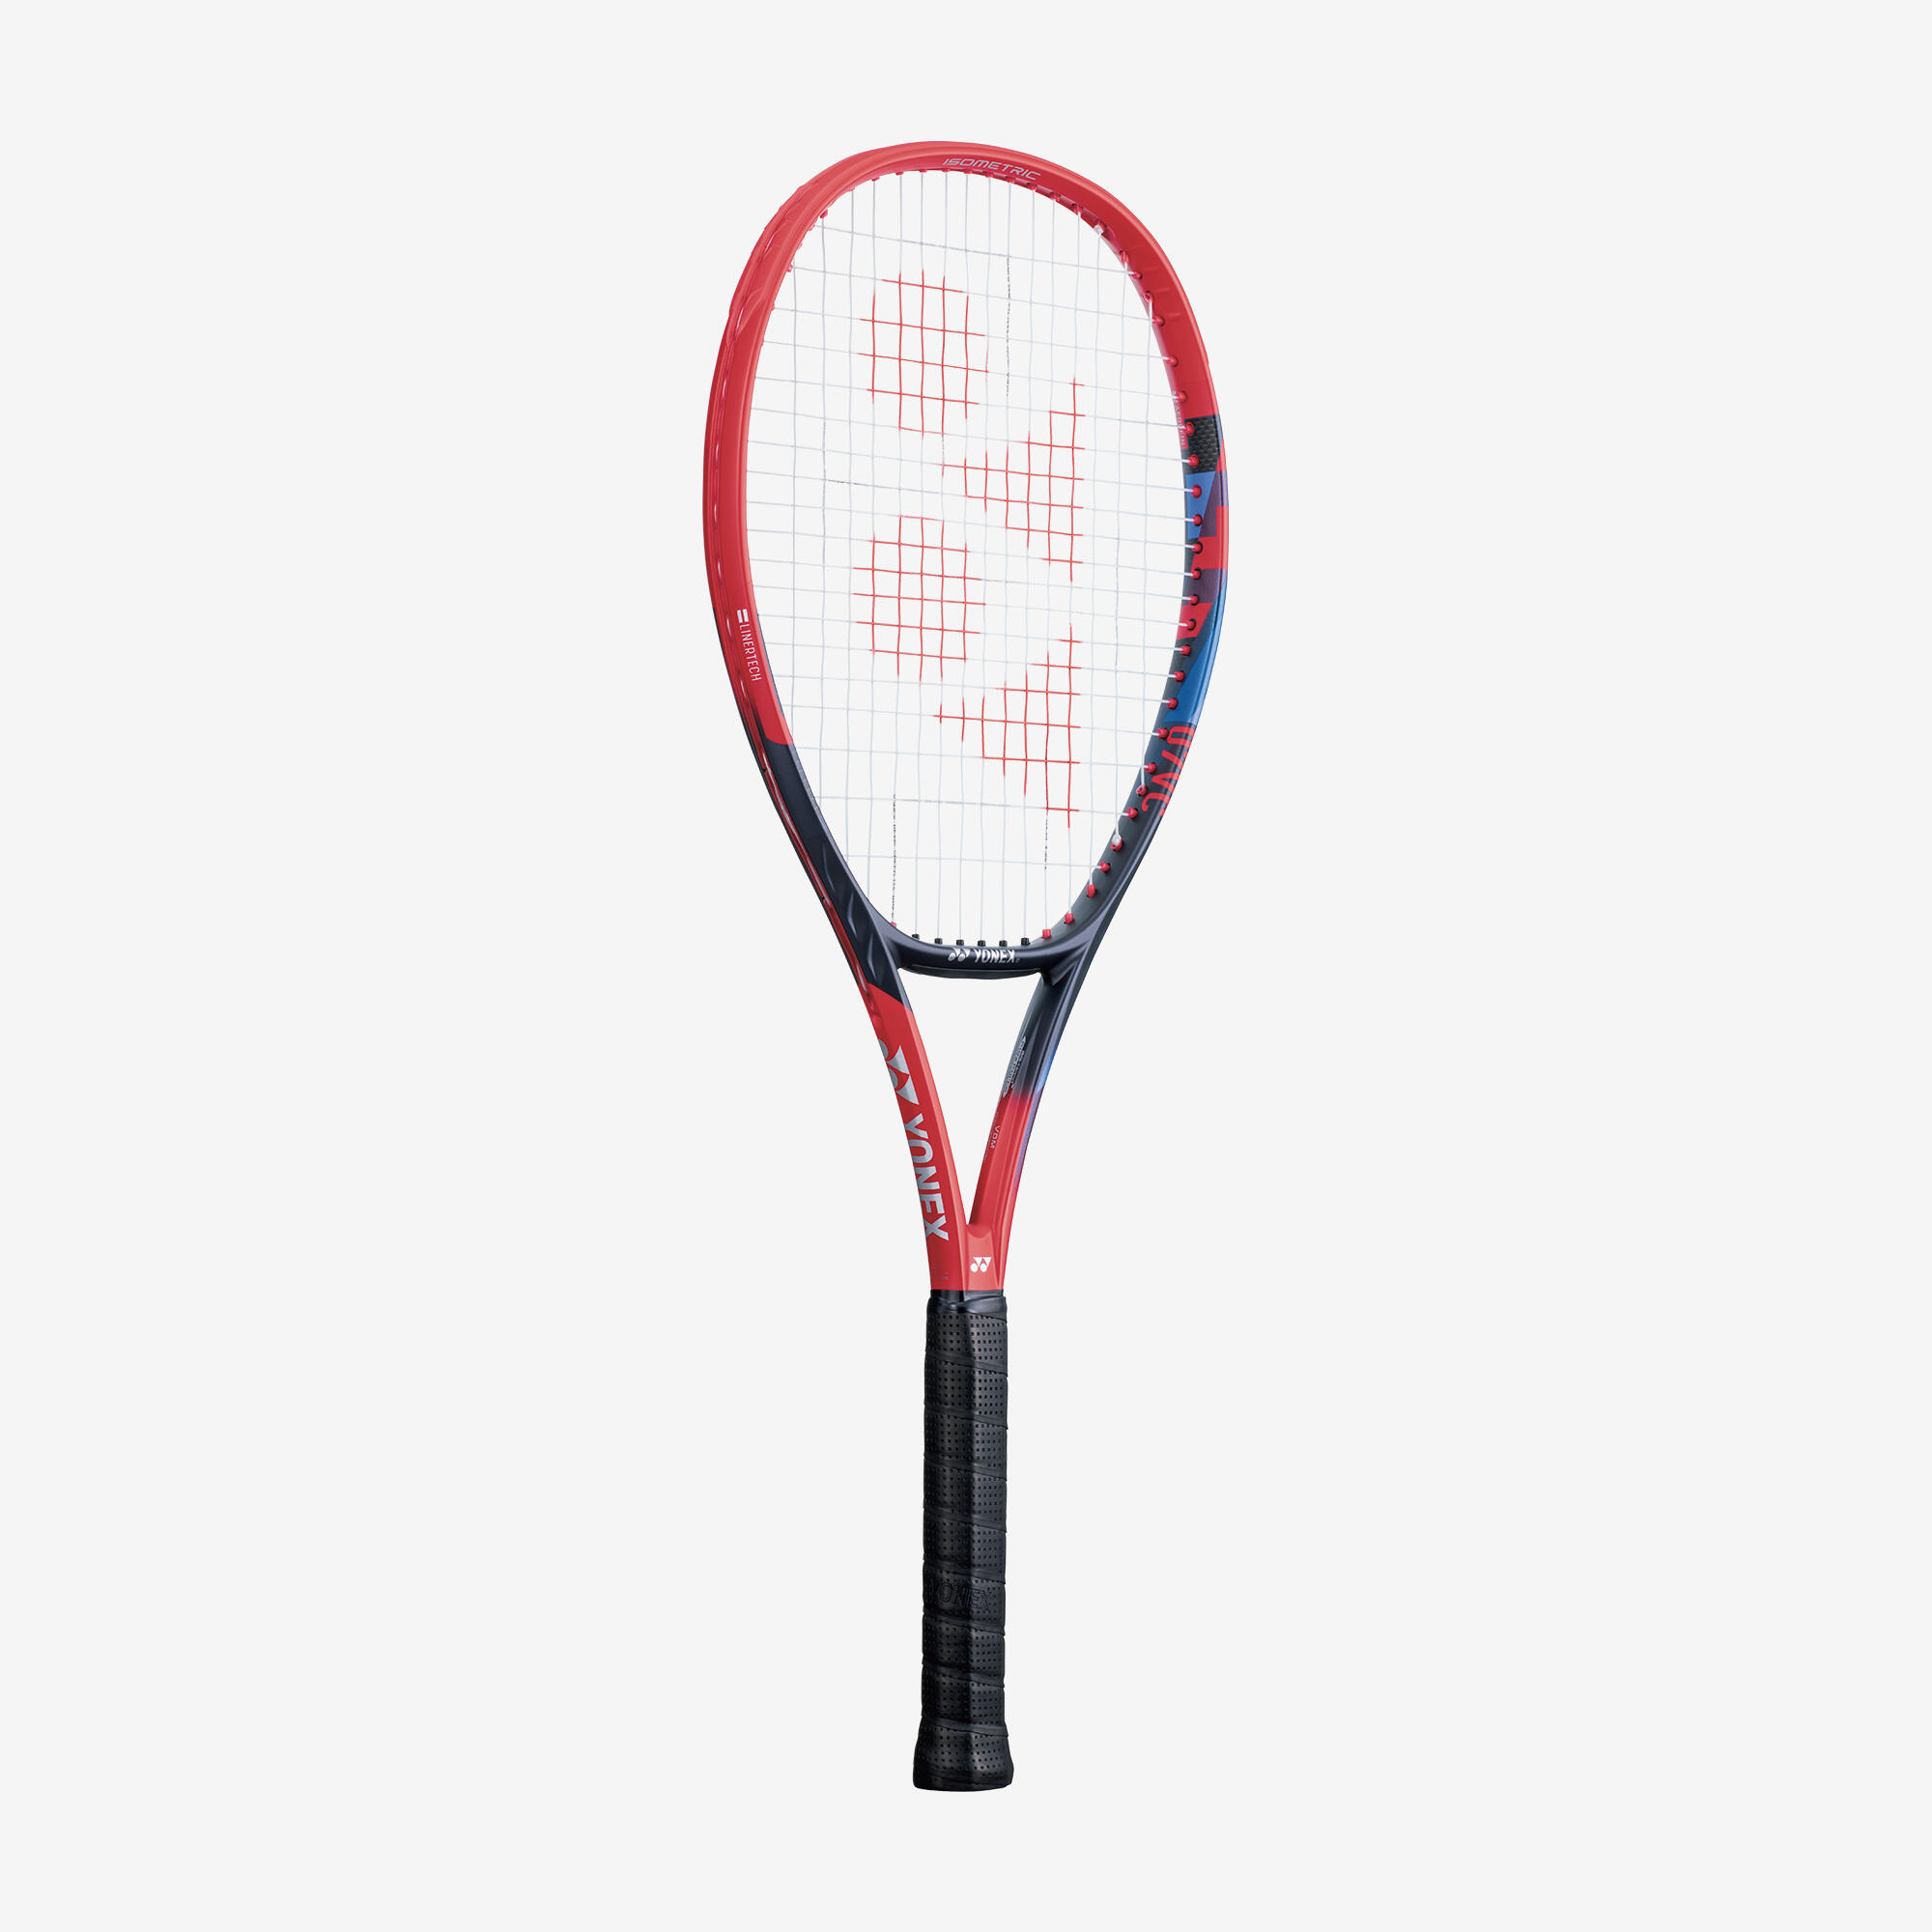 Rachetă Tenis YONEX EVCORE 100 300g Roșu Adulți 100